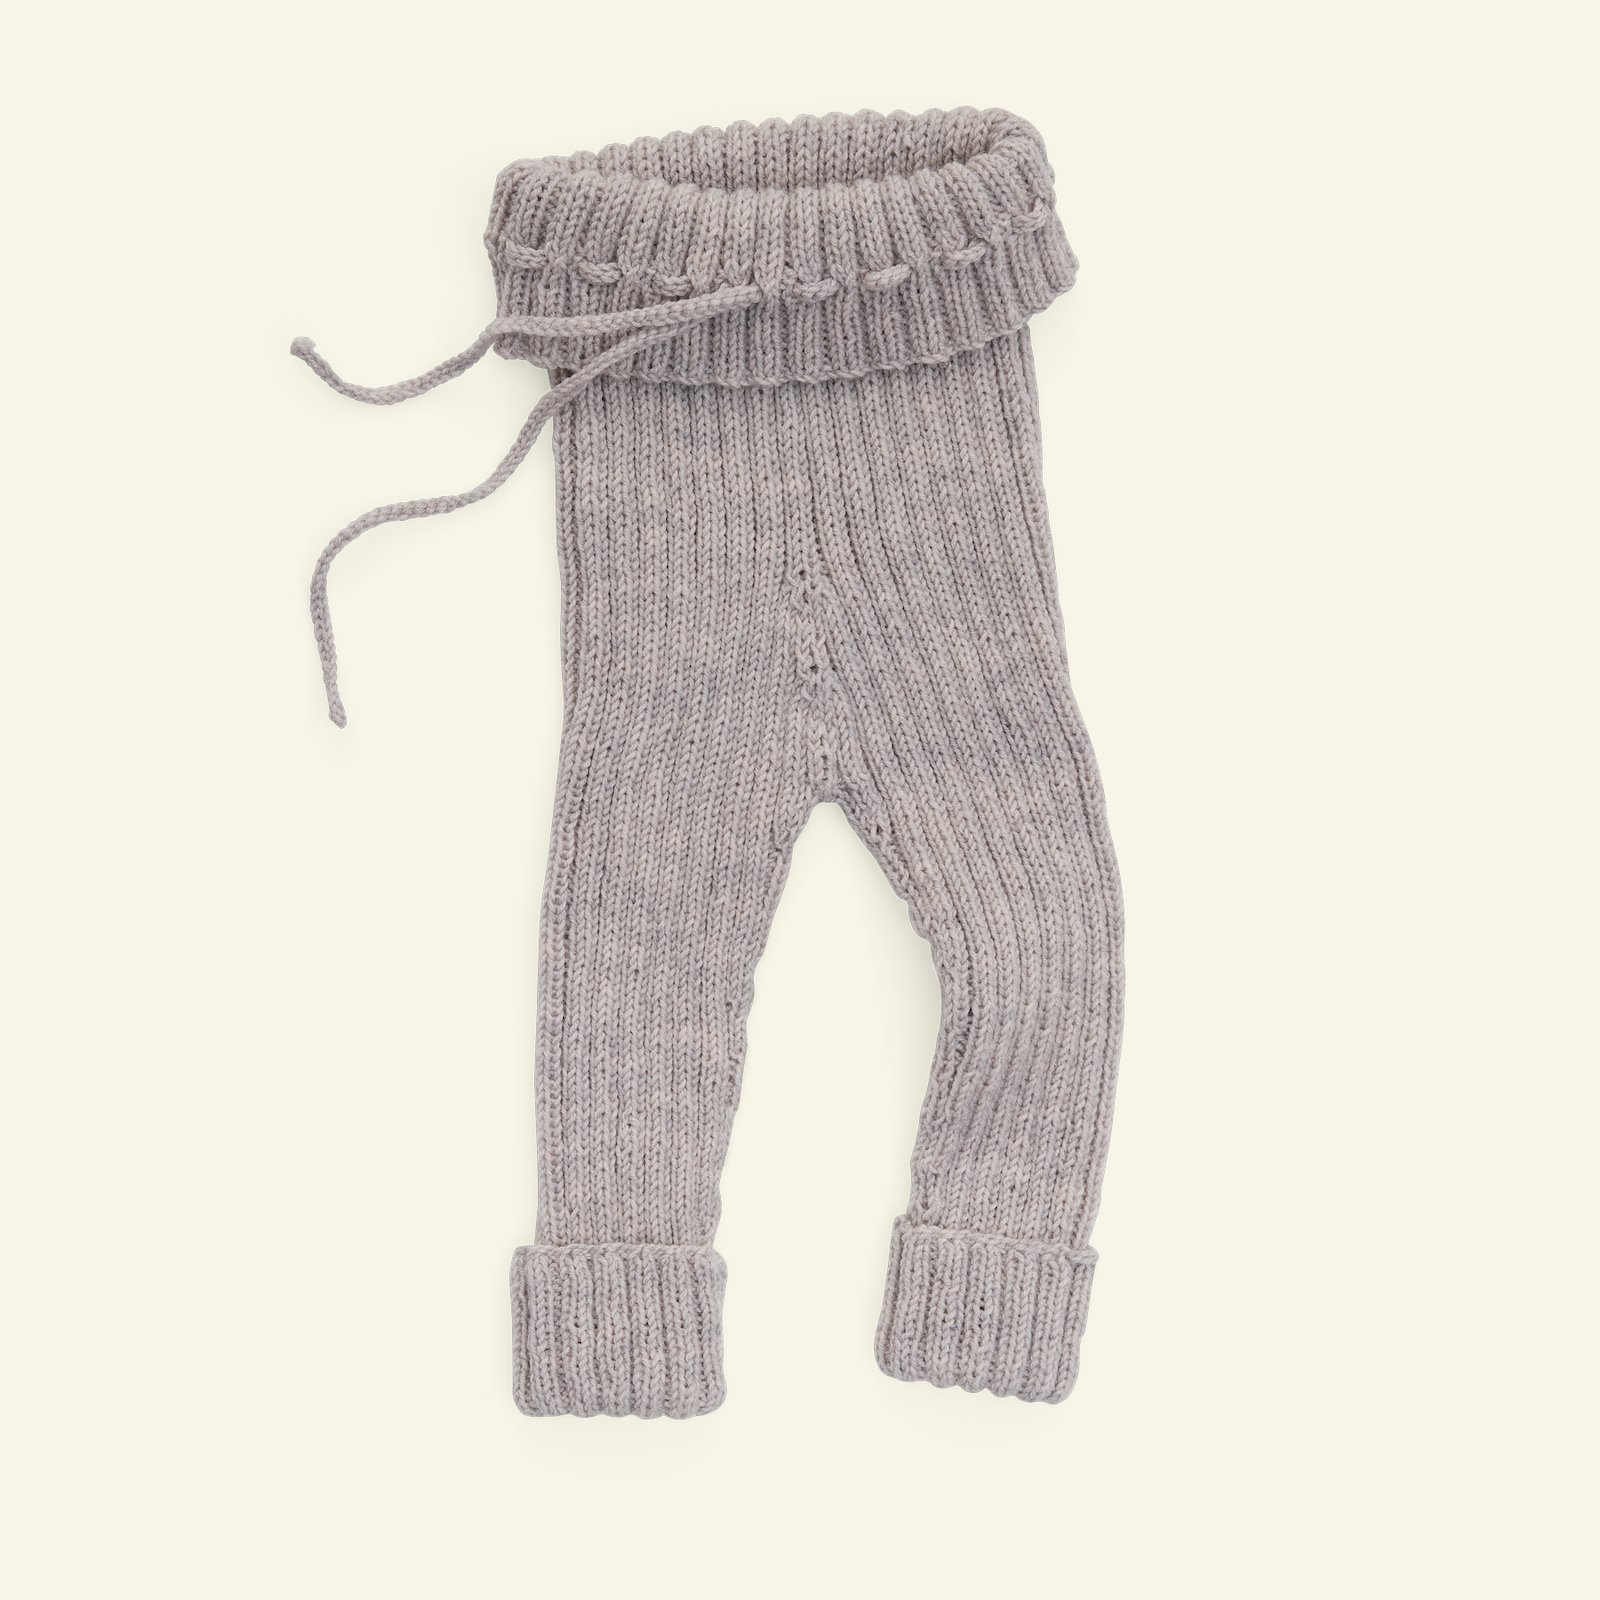 FRAYA strikkeopskrift – Dishy legs baby tights - Delicate FRAYA6057_image_b.png